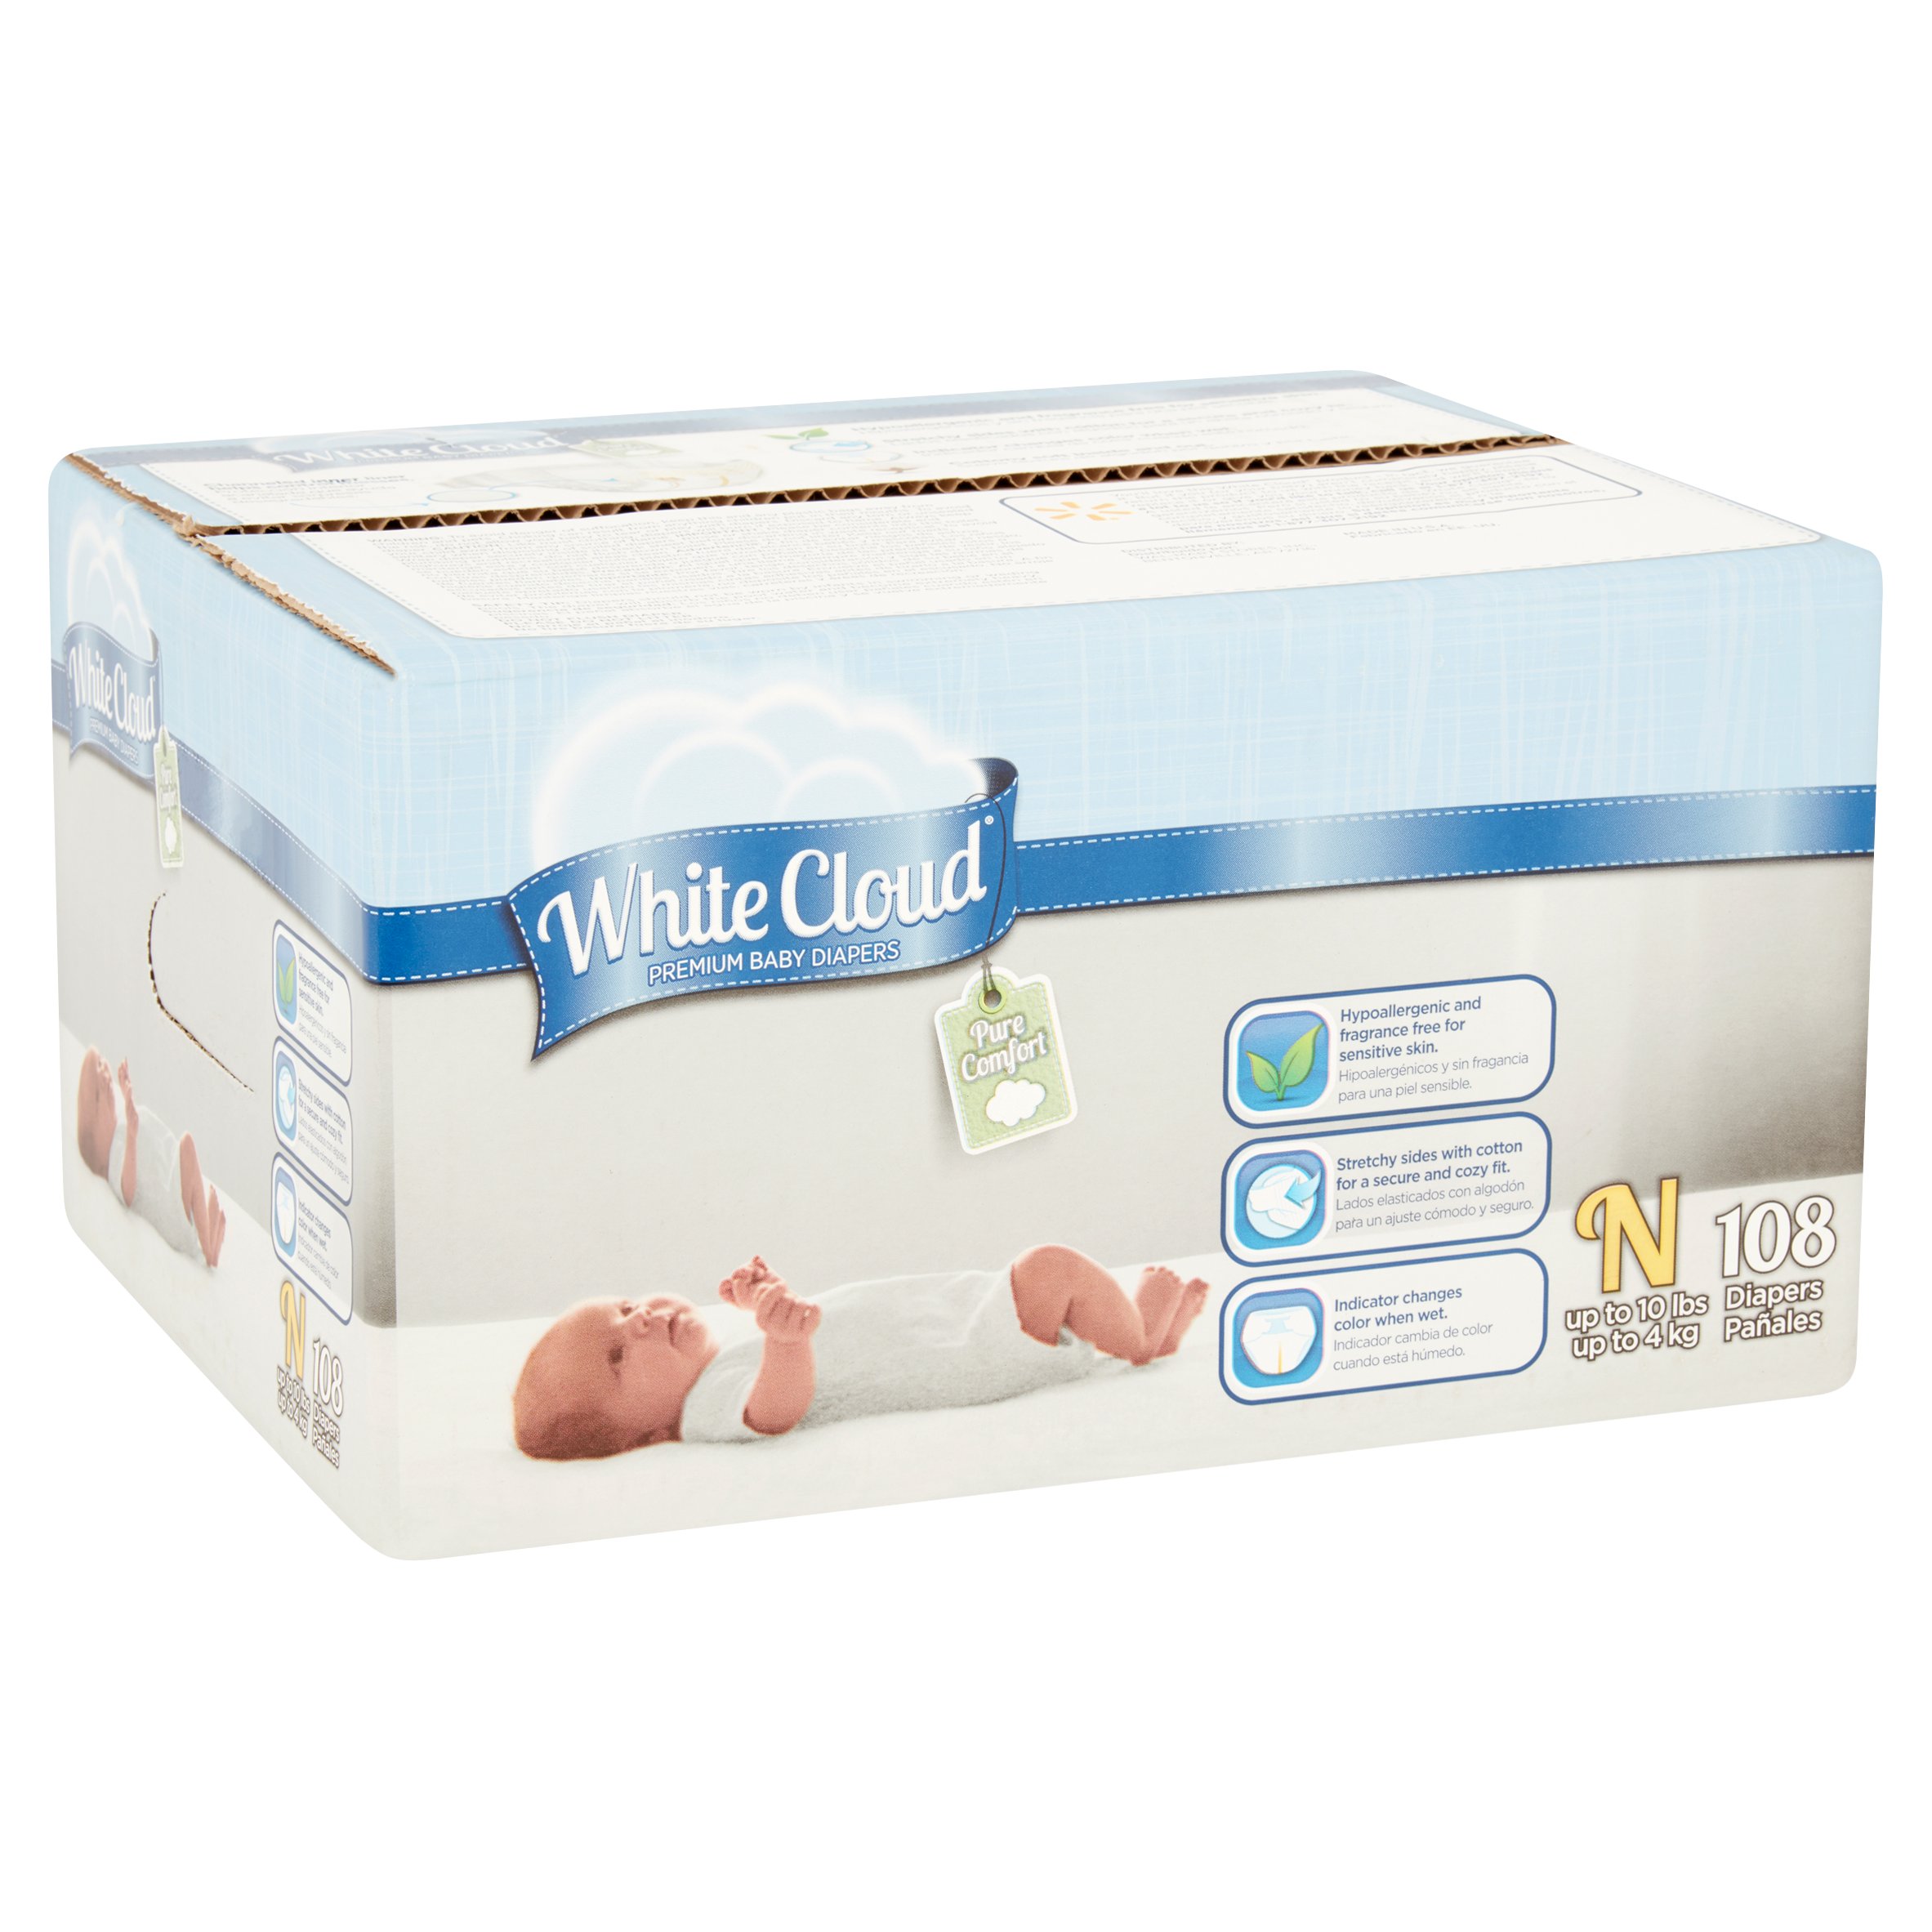 White Cloud Diaper Club Box, Newborn,108 ct - image 2 of 5